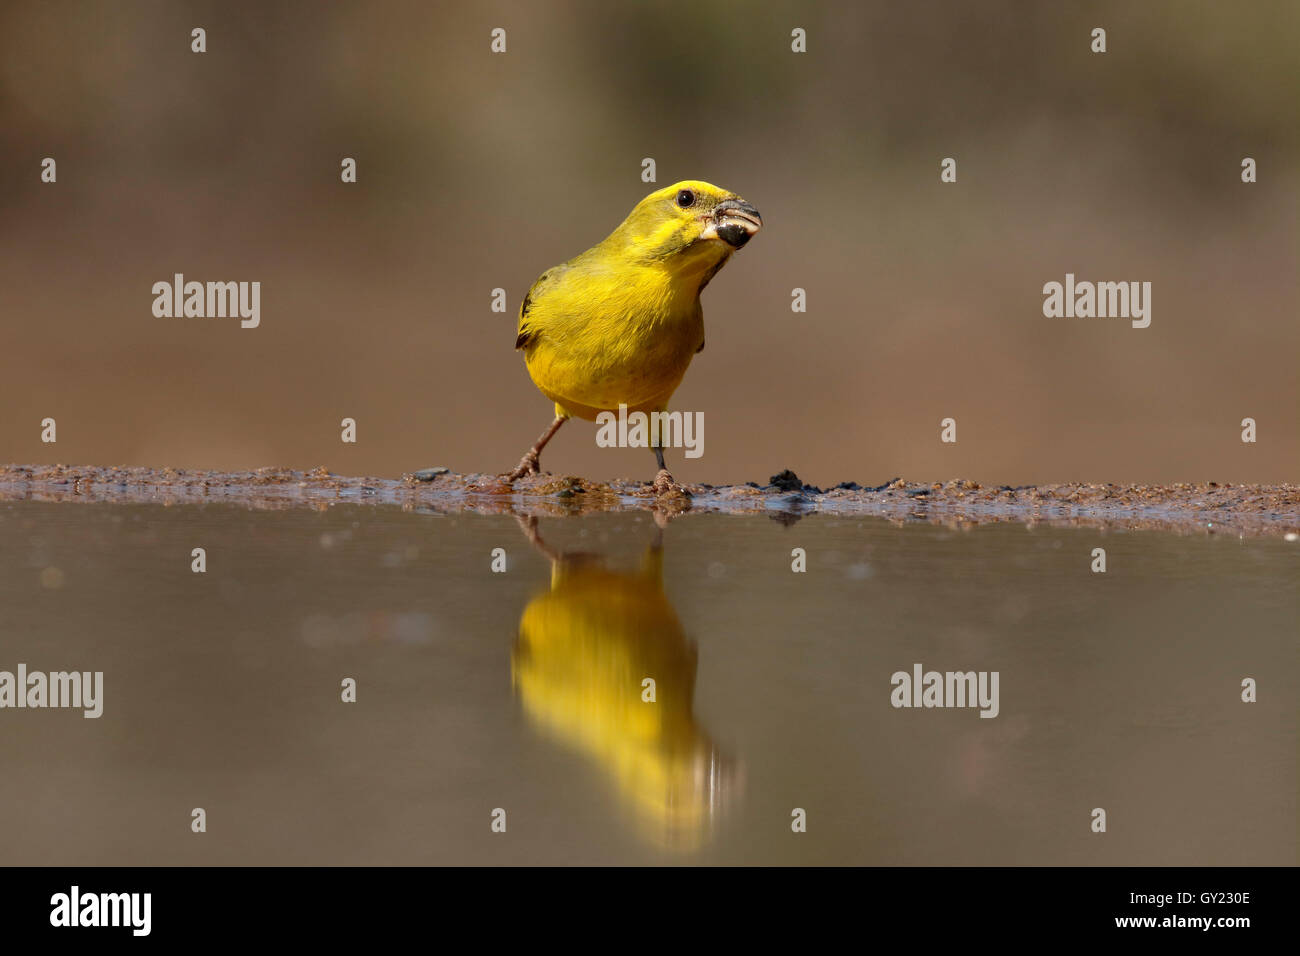 Bully canary, Serinus sulphuratus, single bird at water,   South Africa, August 2016 Stock Photo